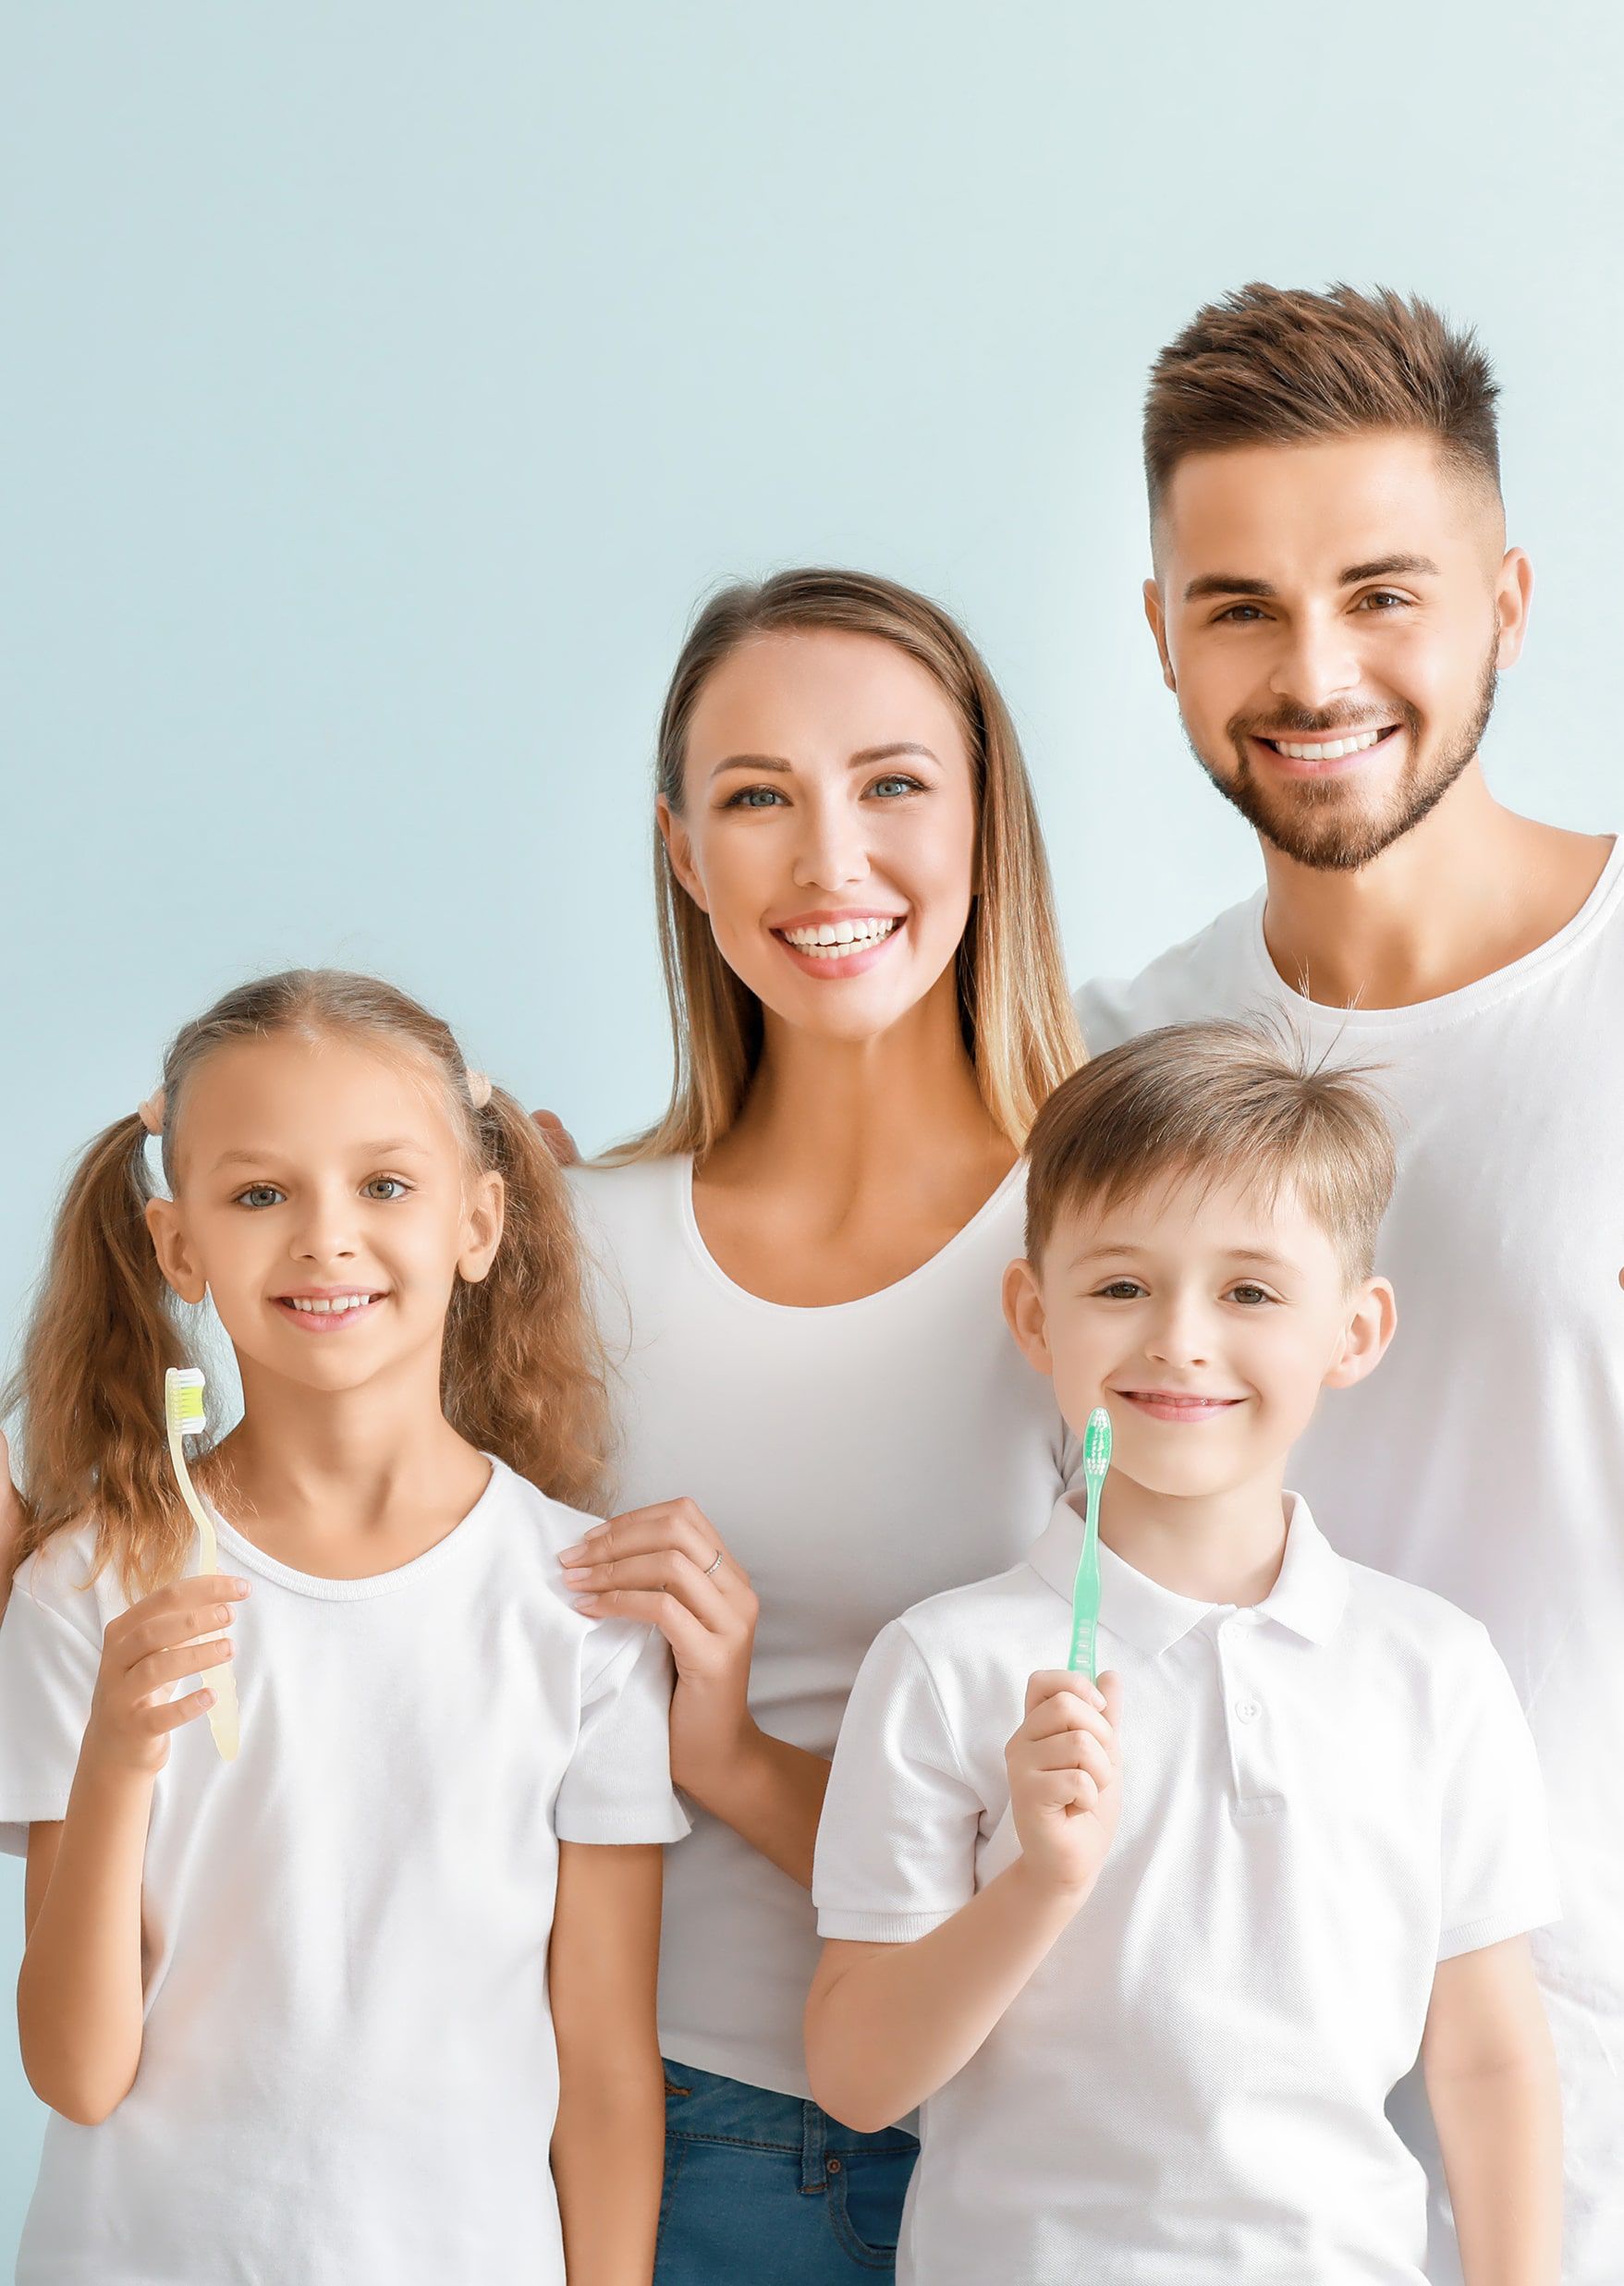 Chirurgiens Dentistes Bordeaux - Famille Dentistes